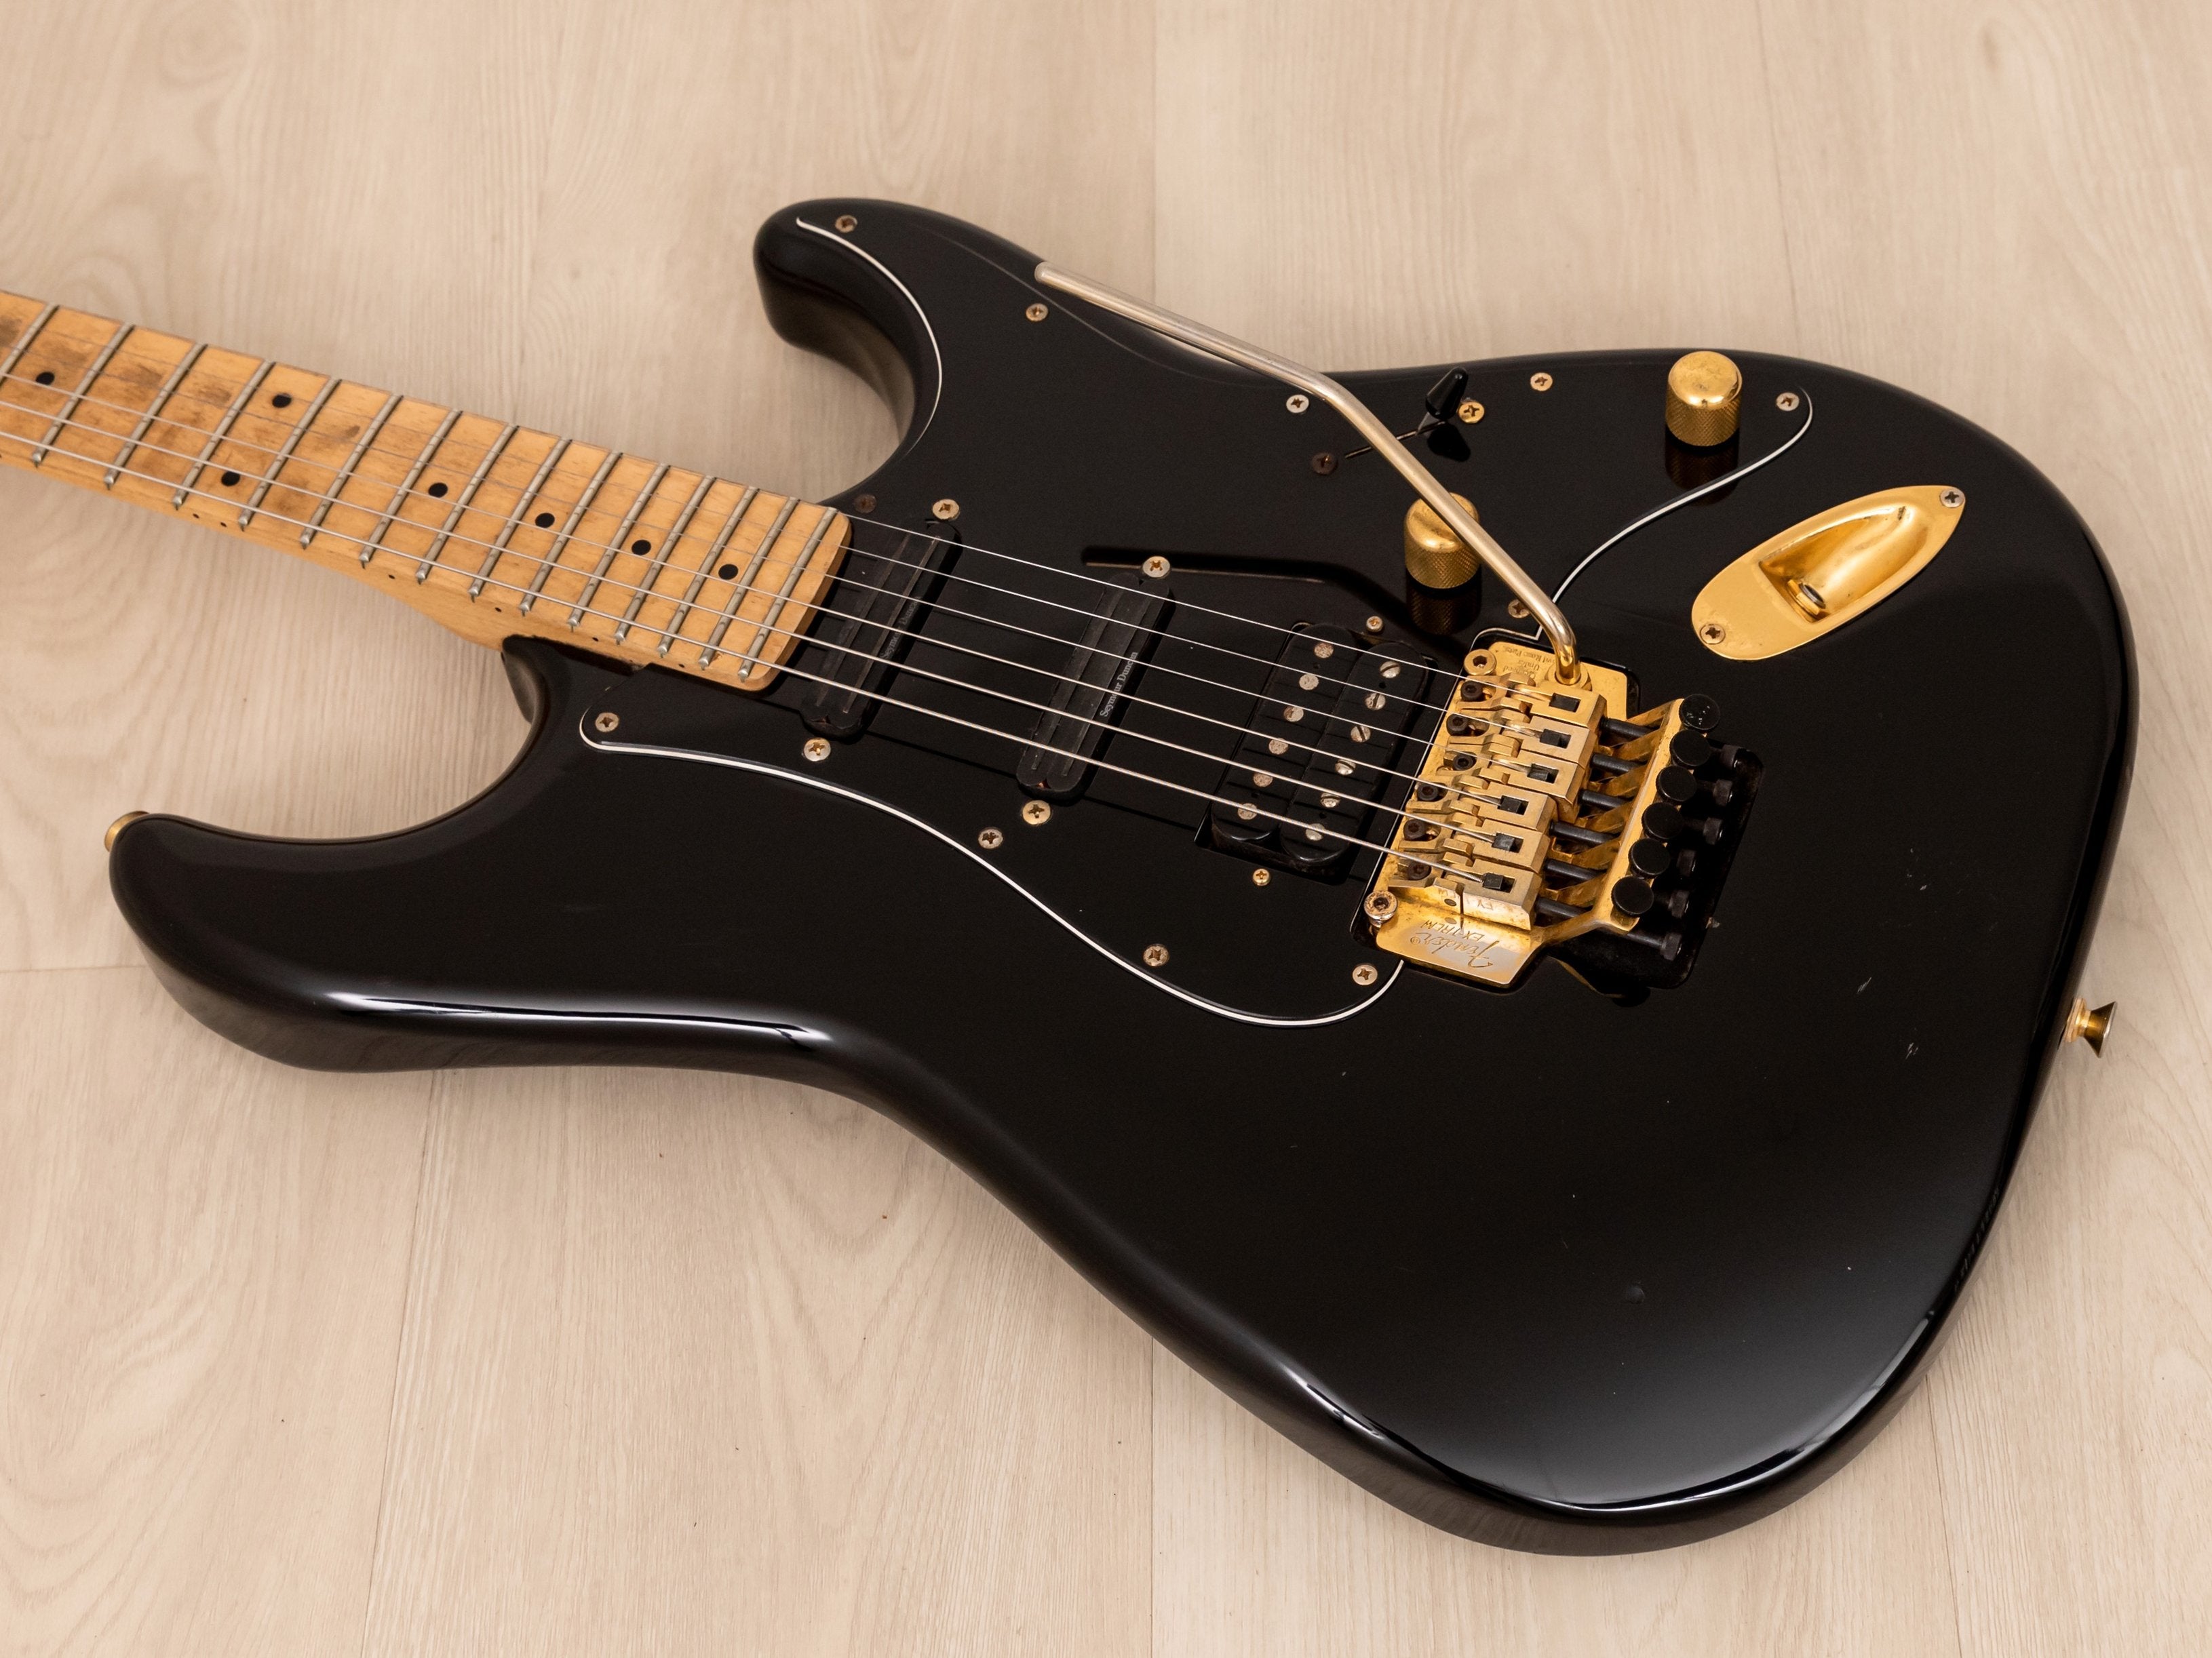 1988 Fender Stratocaster STR-70 SSH Black w/ Seymour Duncan Hot Rails & Floyd Rose, Japan MIJ Fujigen